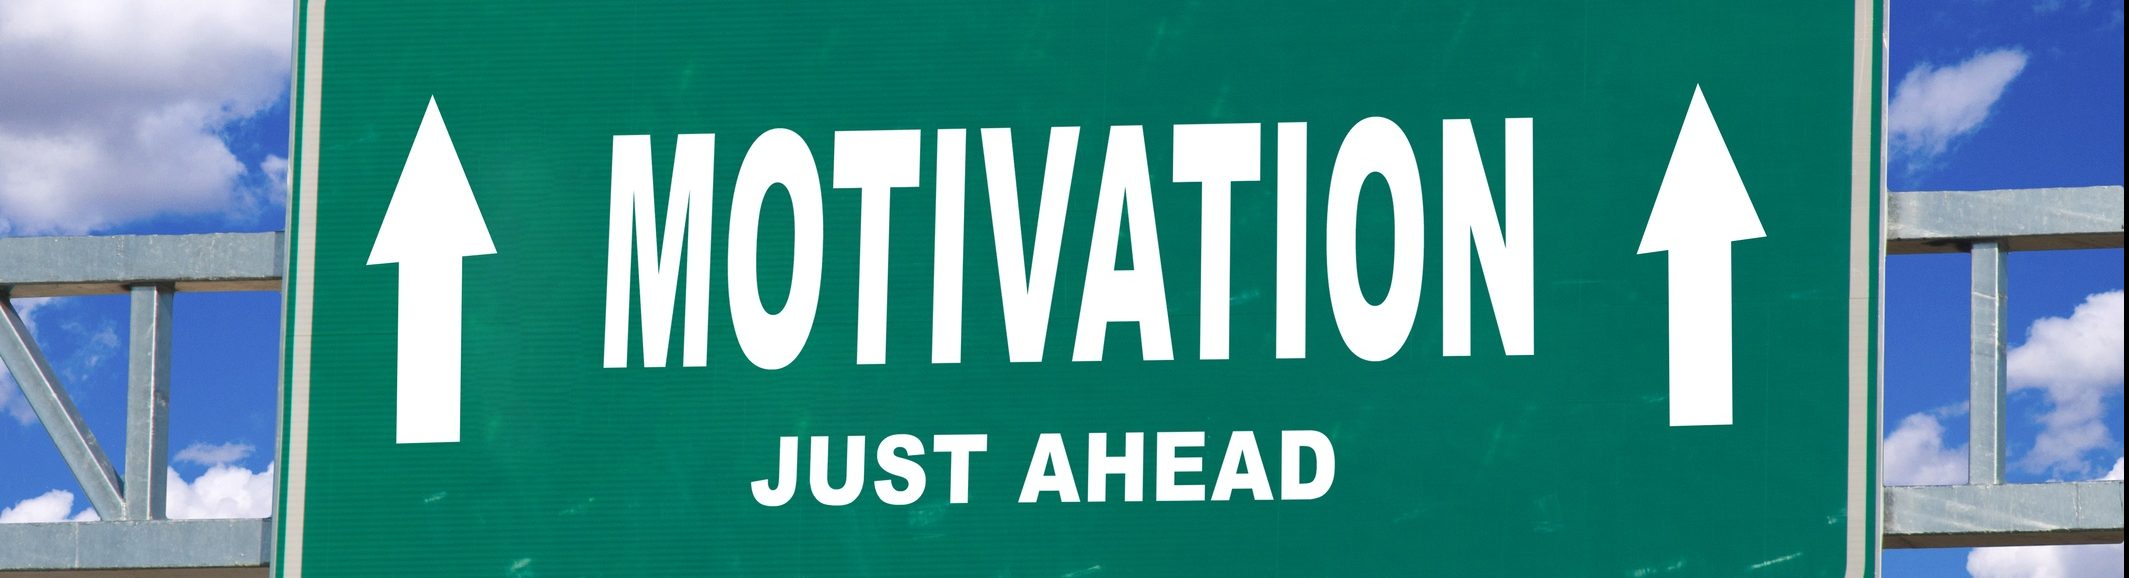 Employee motivation training